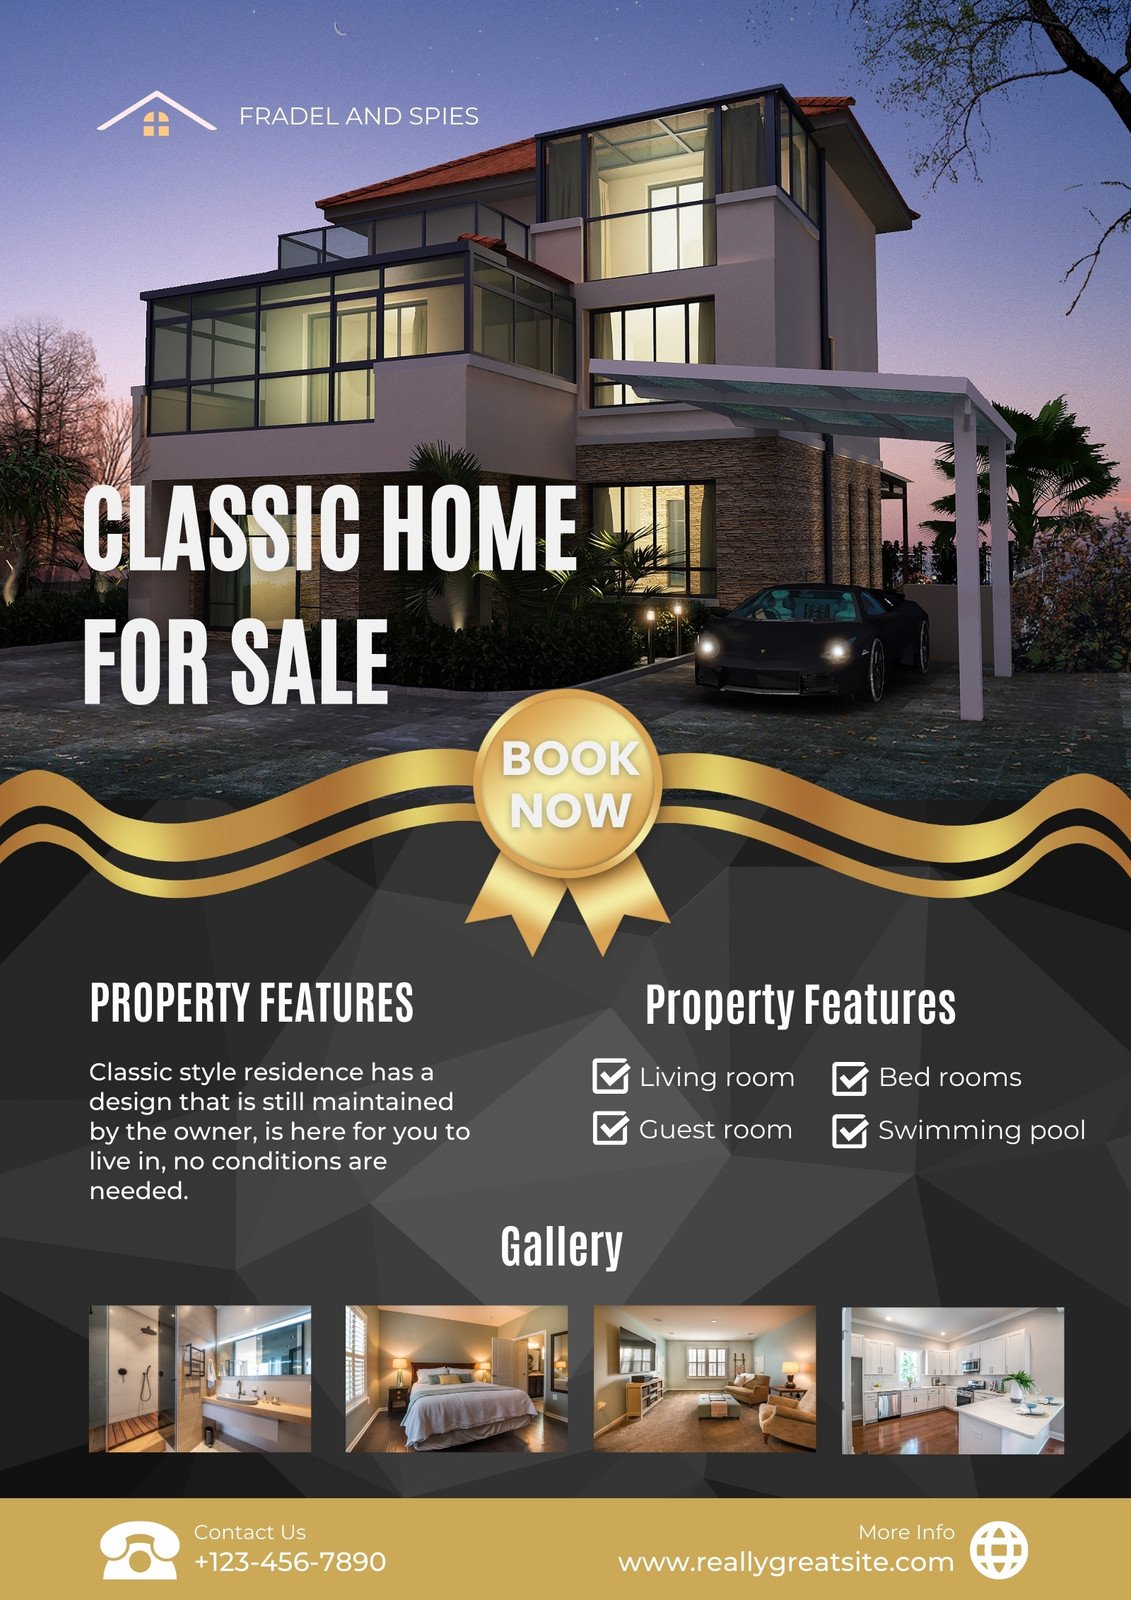 https://marketplace.canva.com/EAFh9B3IZ90/1/0/1131w/canva-blue-and-black-modern-home-for-sale-flyer-tzRhikAlsWE.jpg